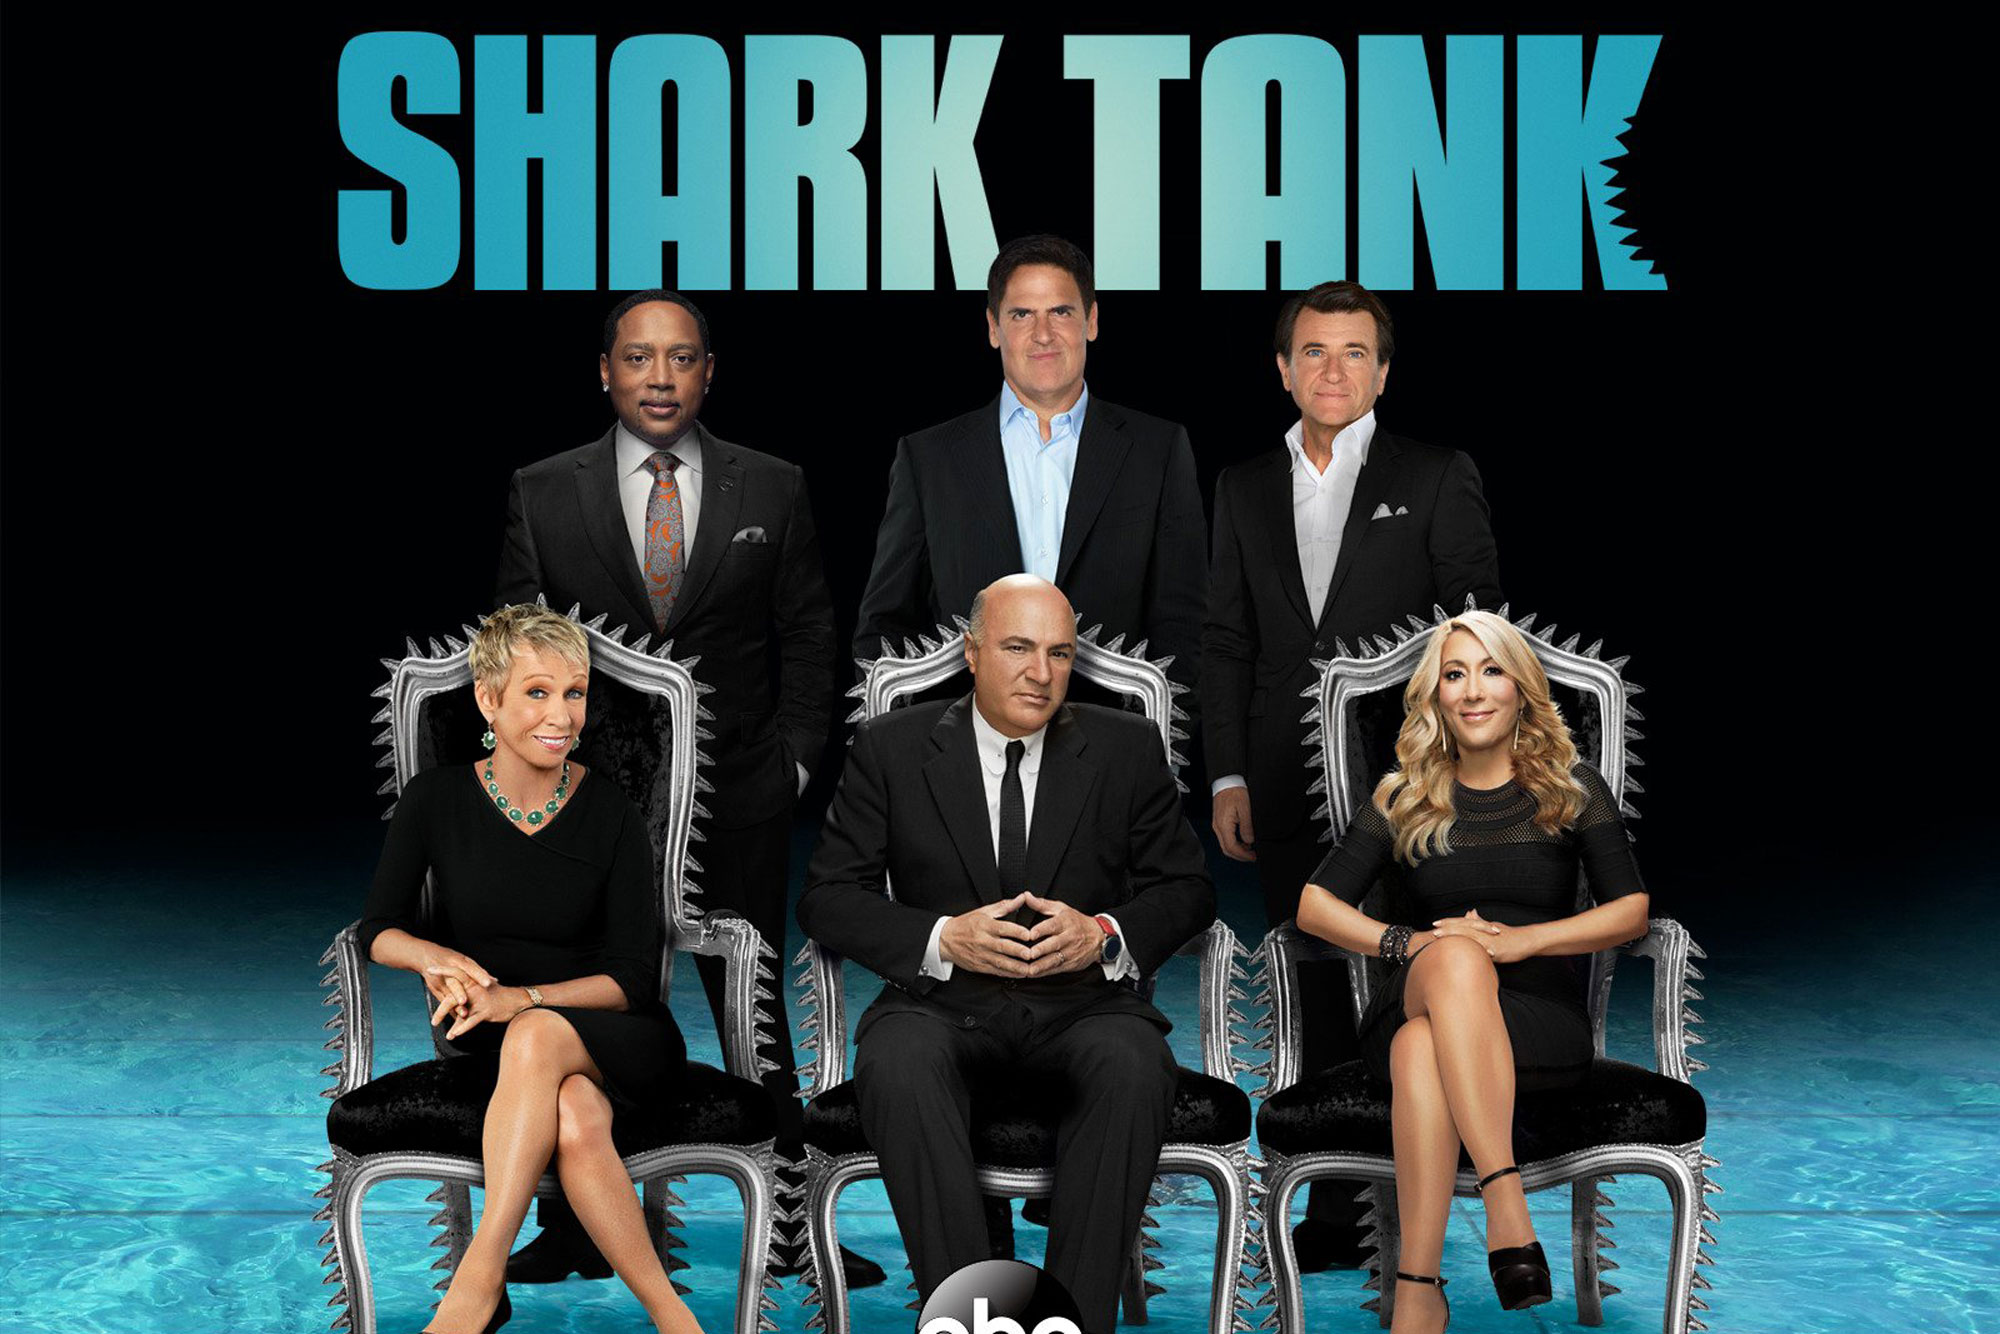 Shark Tank is a dark comedy